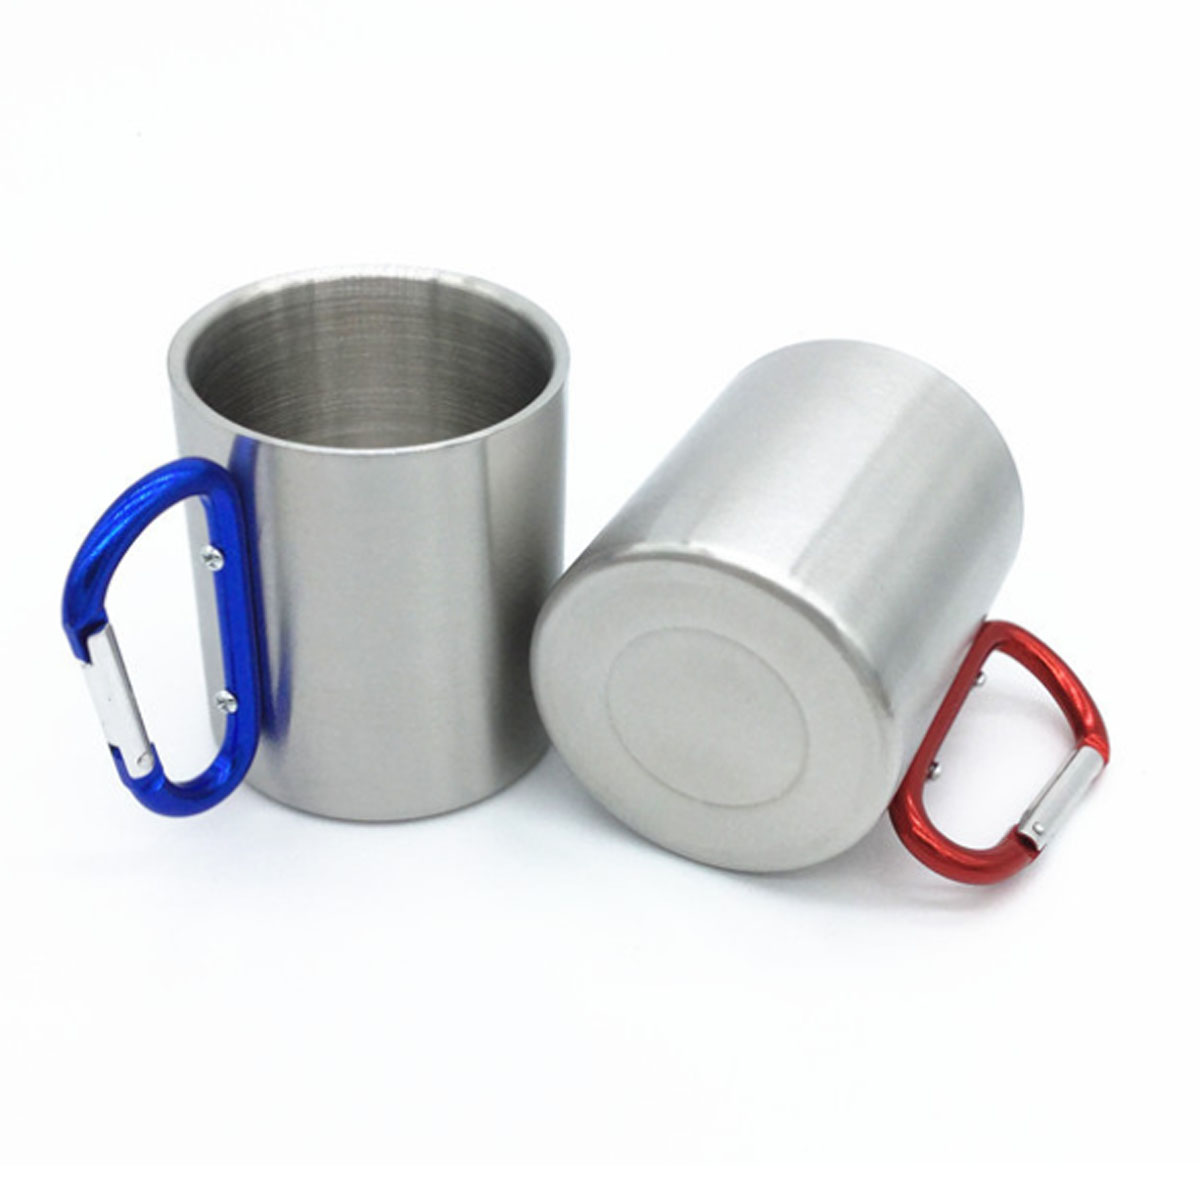 GL-AAD1062 7.5oz Stainless Steel Mug with Handle